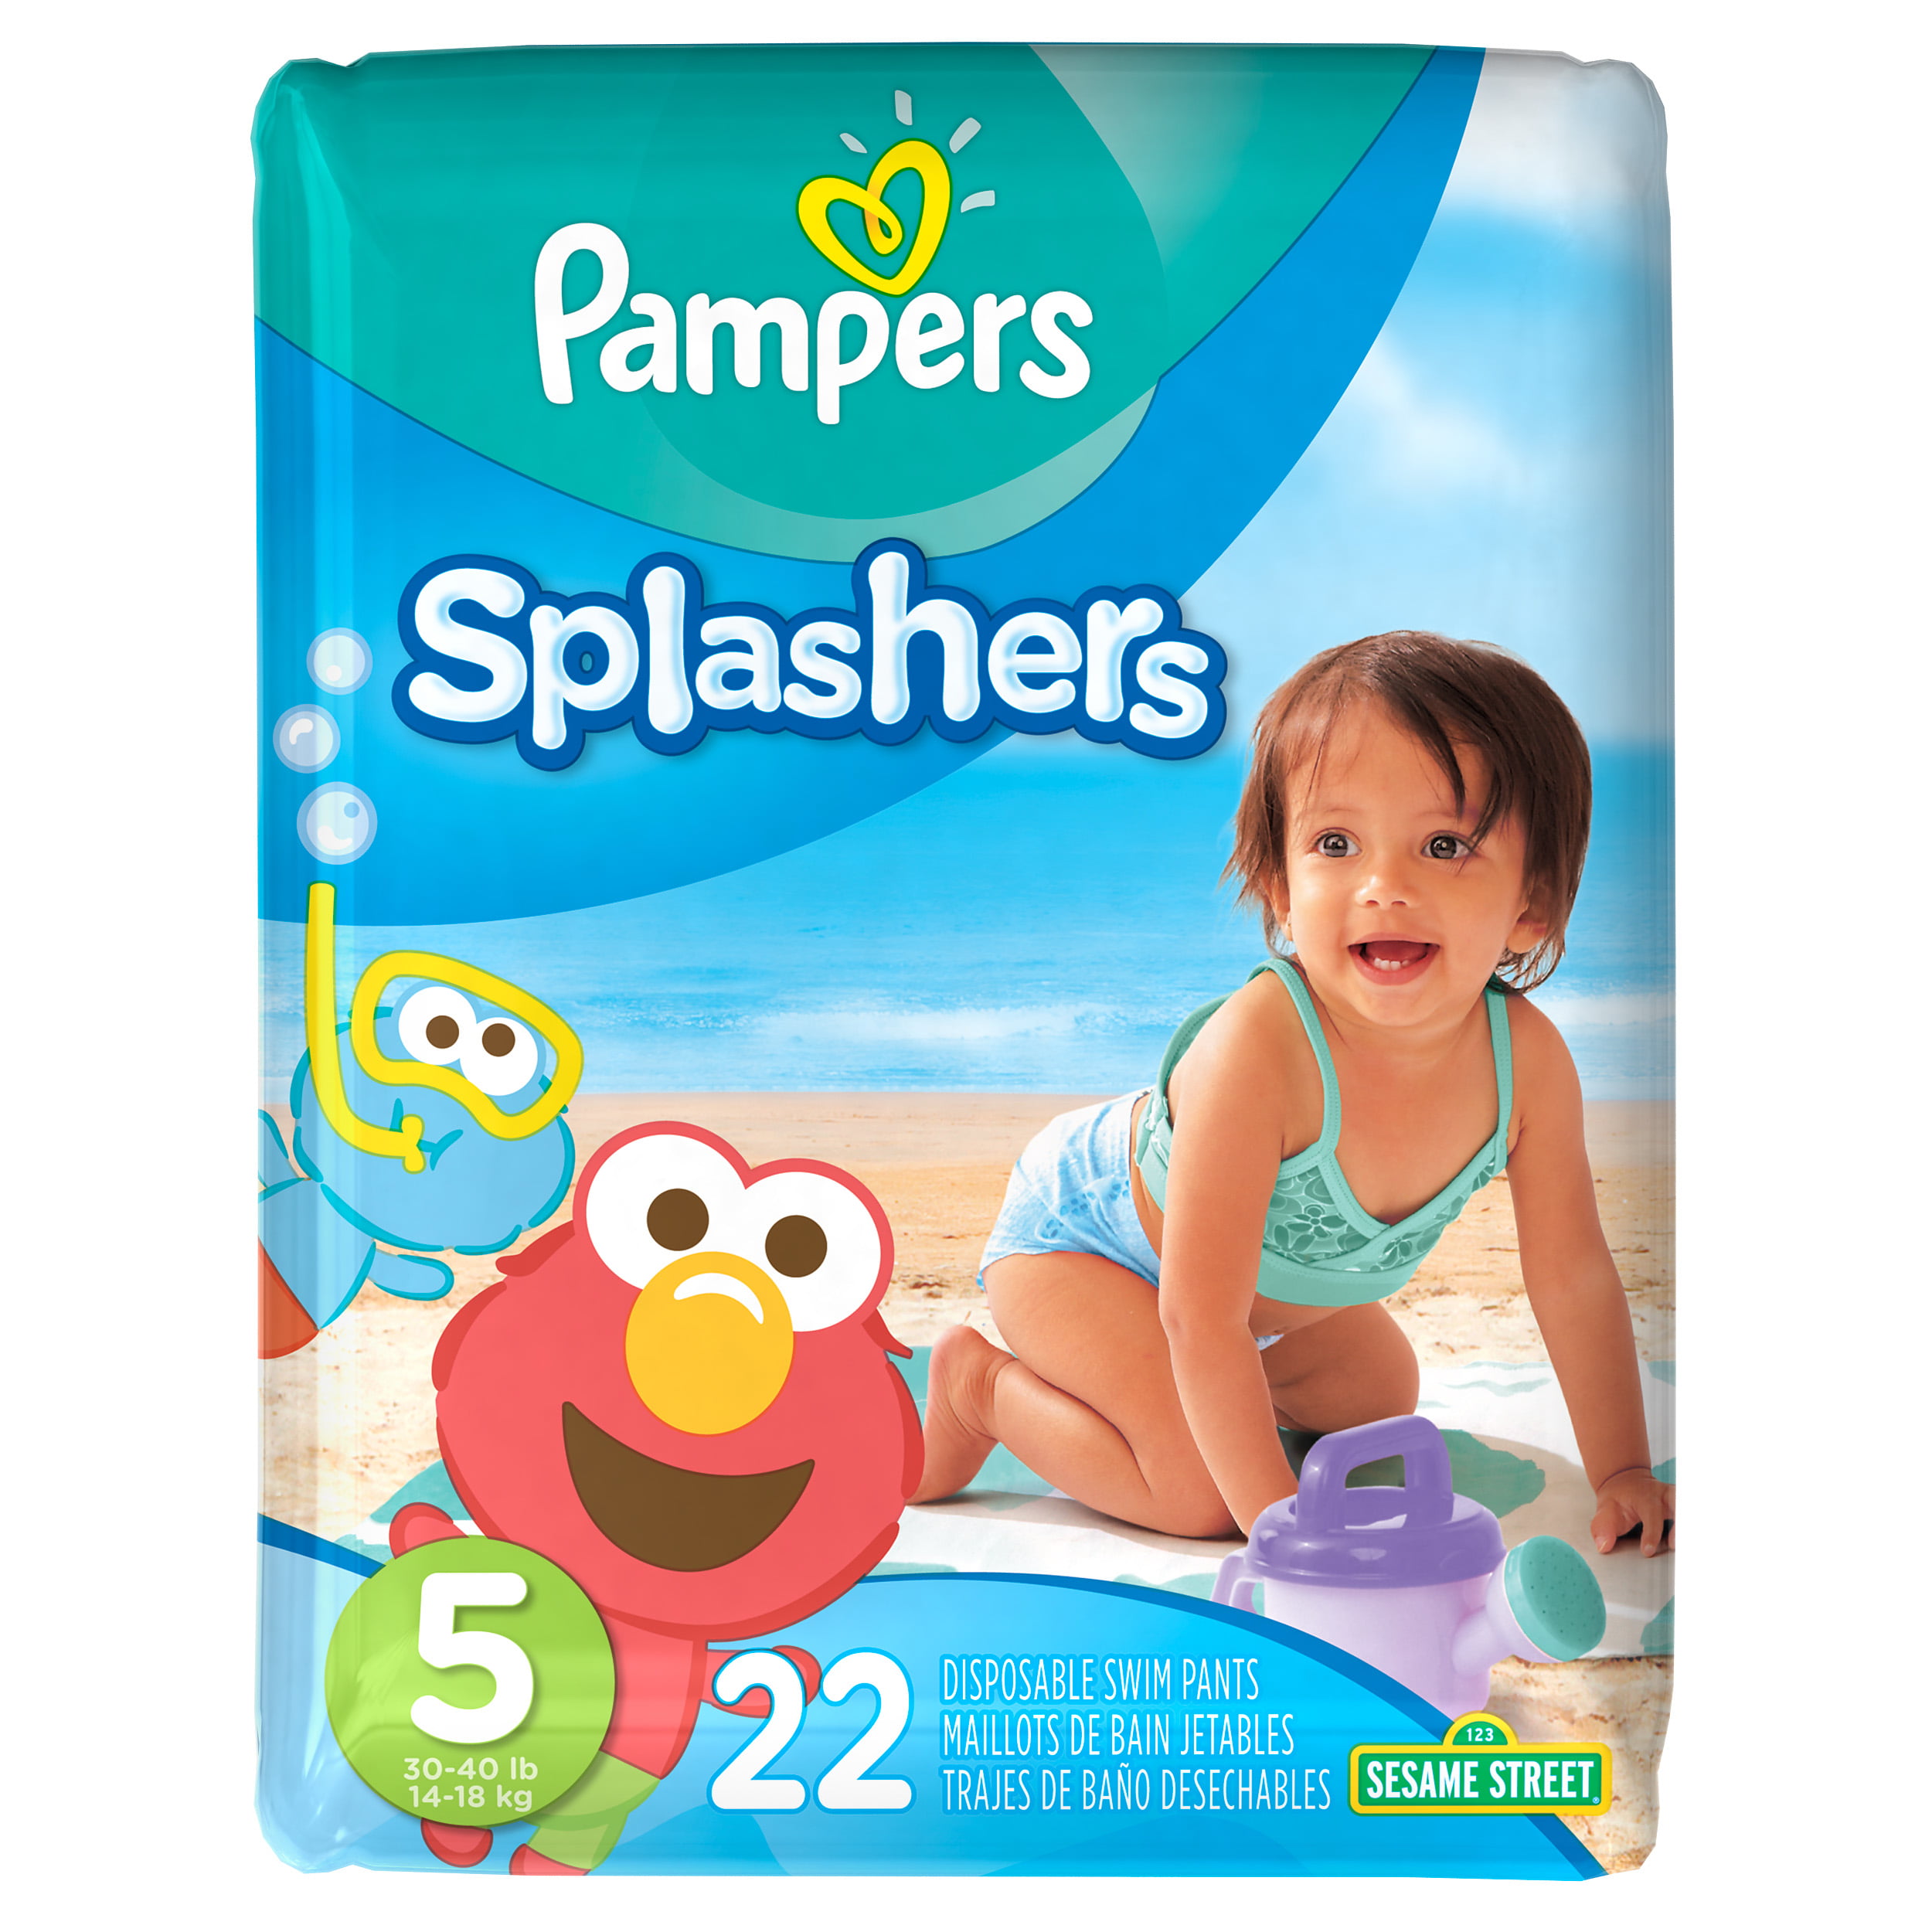 22 Pampers Splashers Size 5-30-40 lbs Disposable Swim Pants Sesame Street 